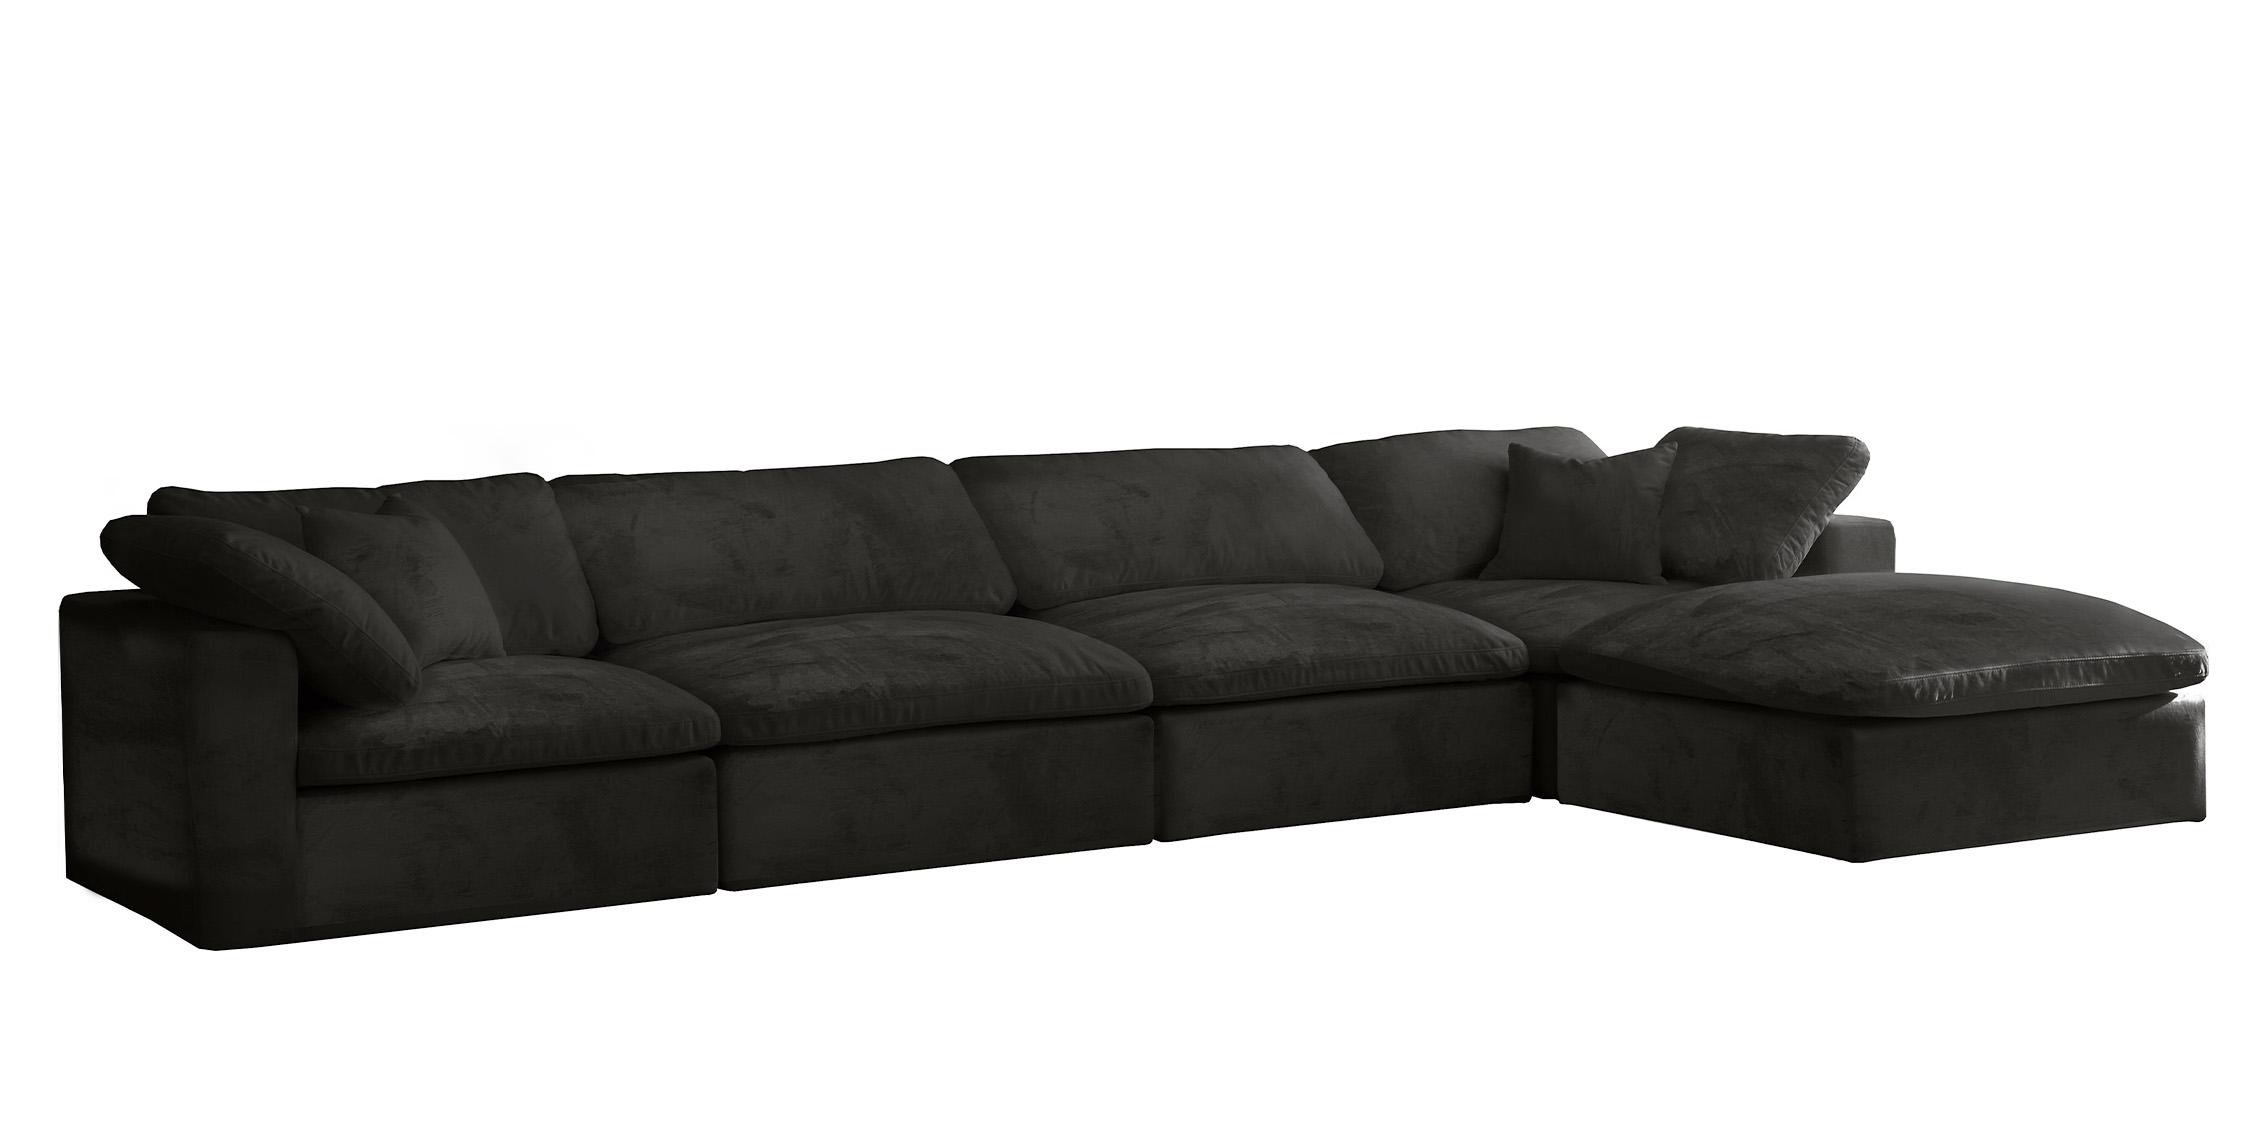 Contemporary, Modern Modular Sectional Sofa 634Black-Sec5A 634Black-Sec5A in Black Fabric